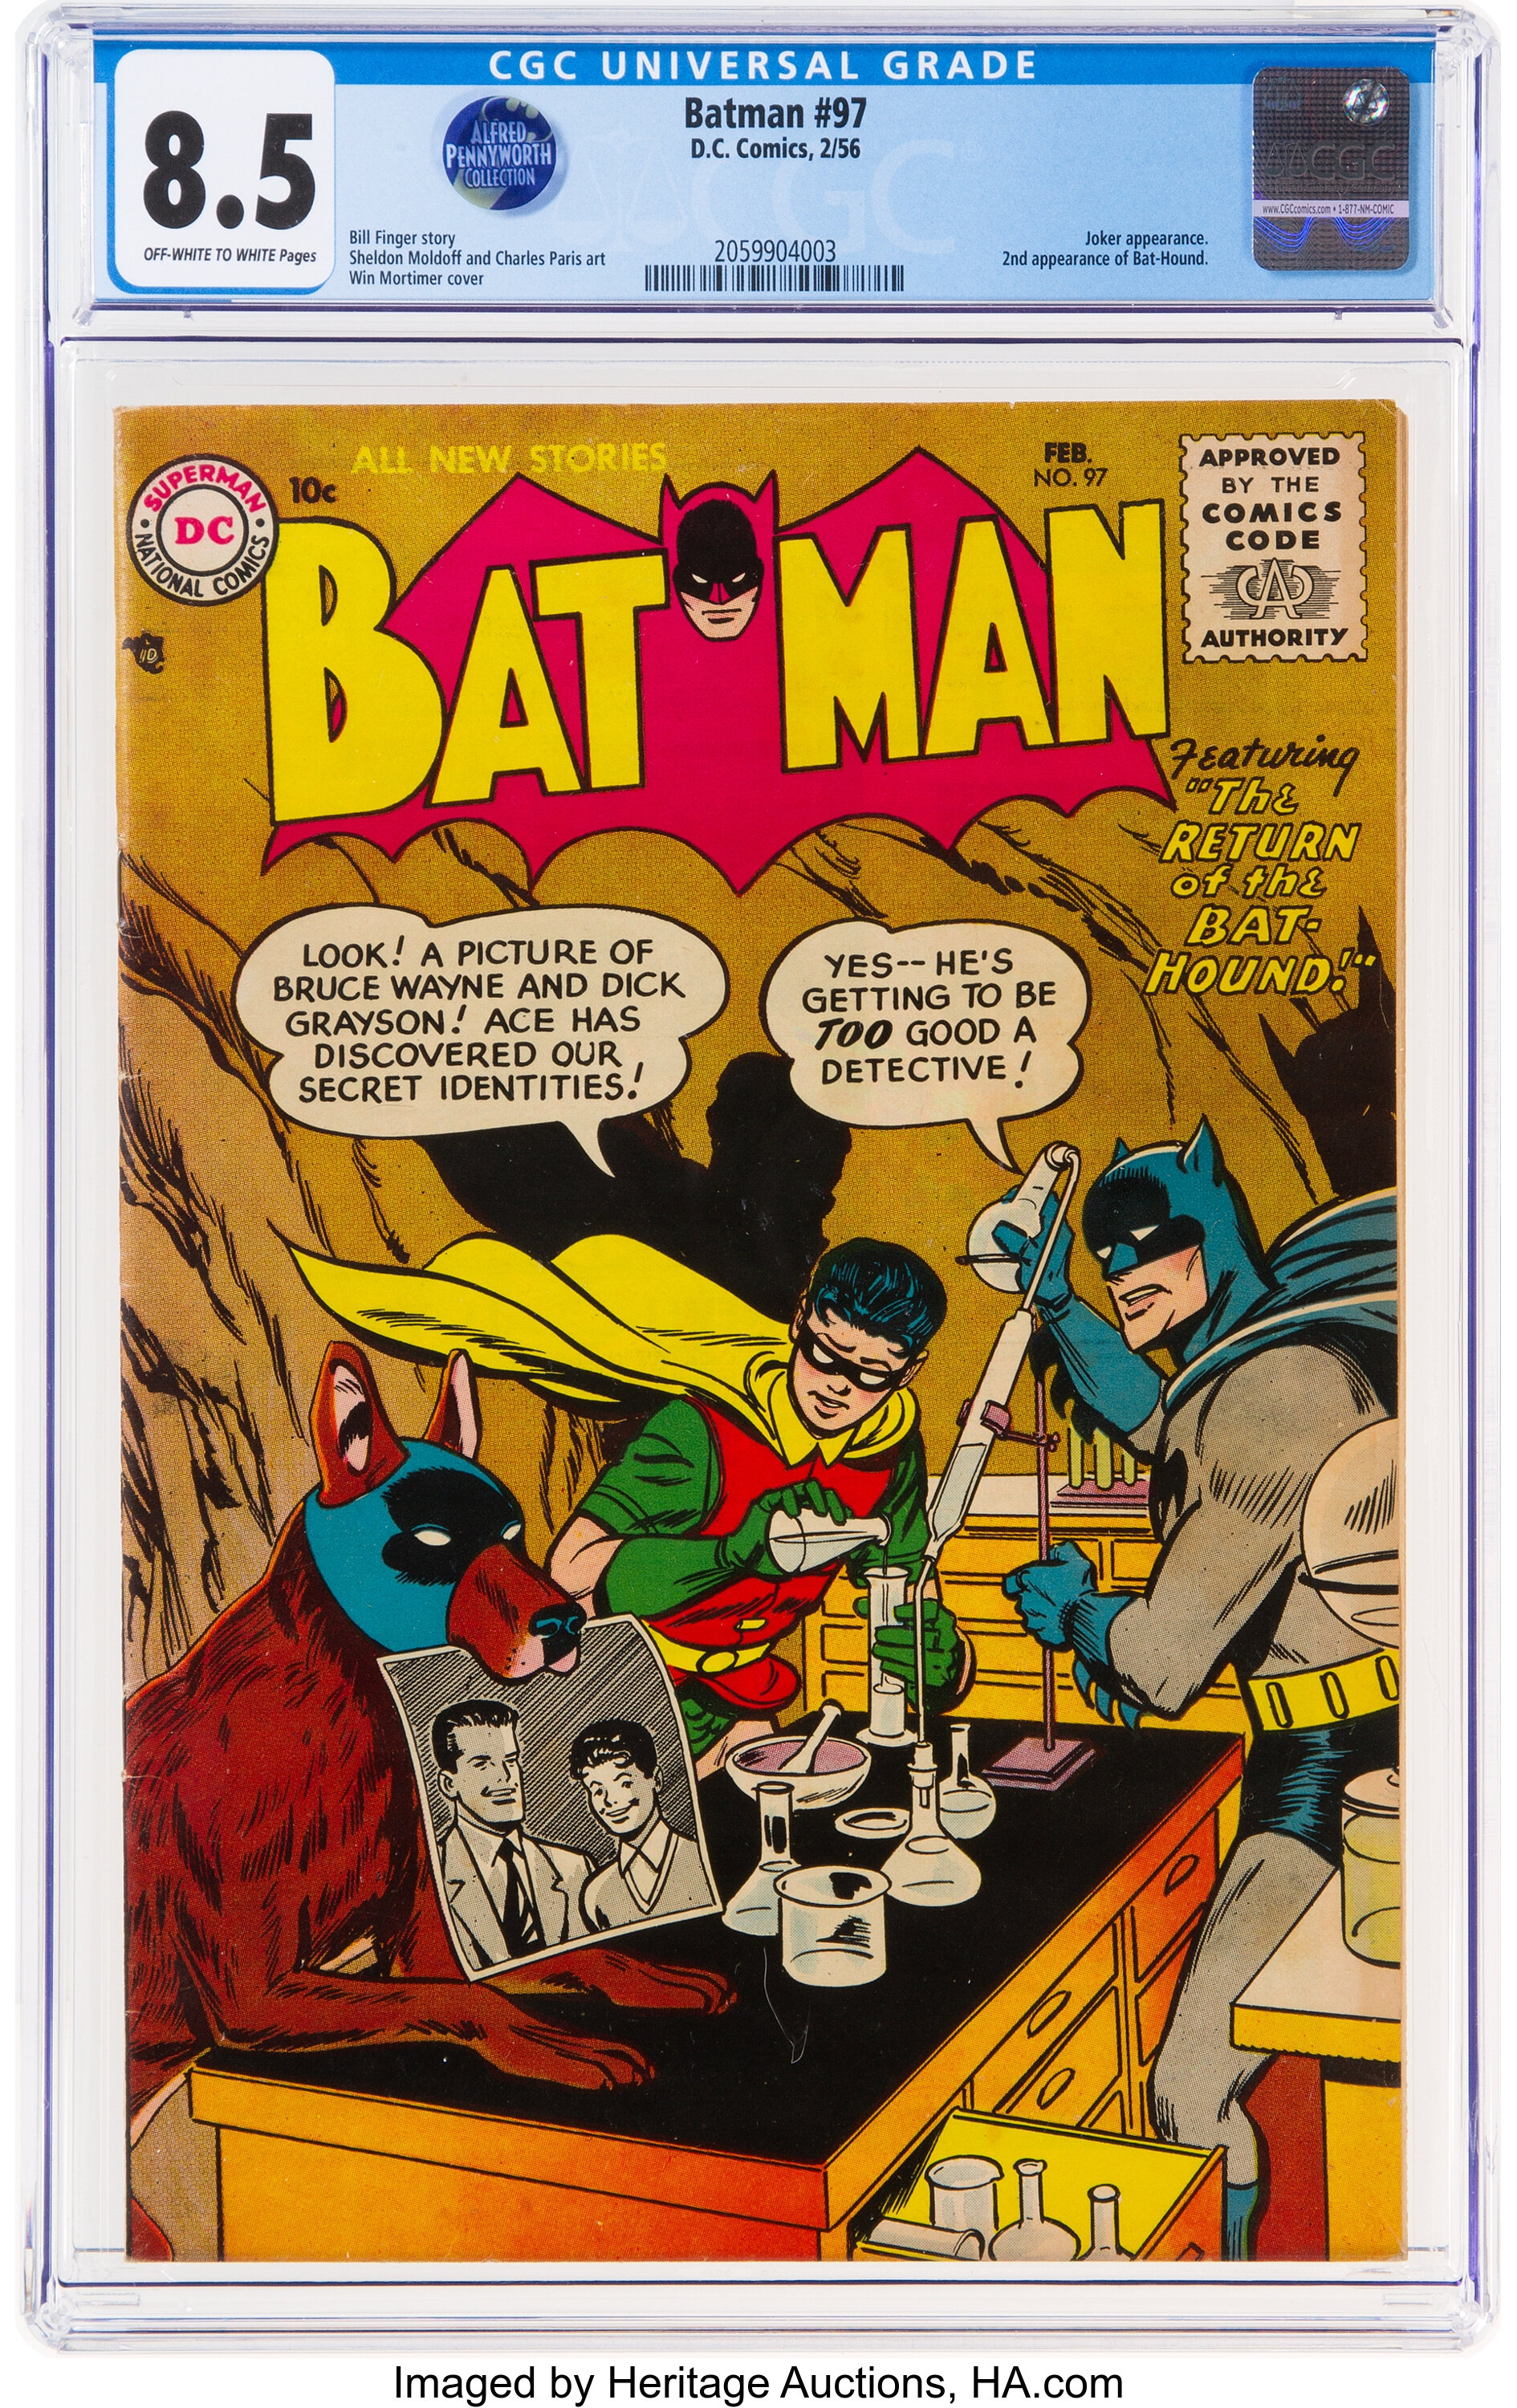 veeg nog een keer verkenner How Much Is Batman #97 Worth? Browse Comic Prices | Heritage Auctions